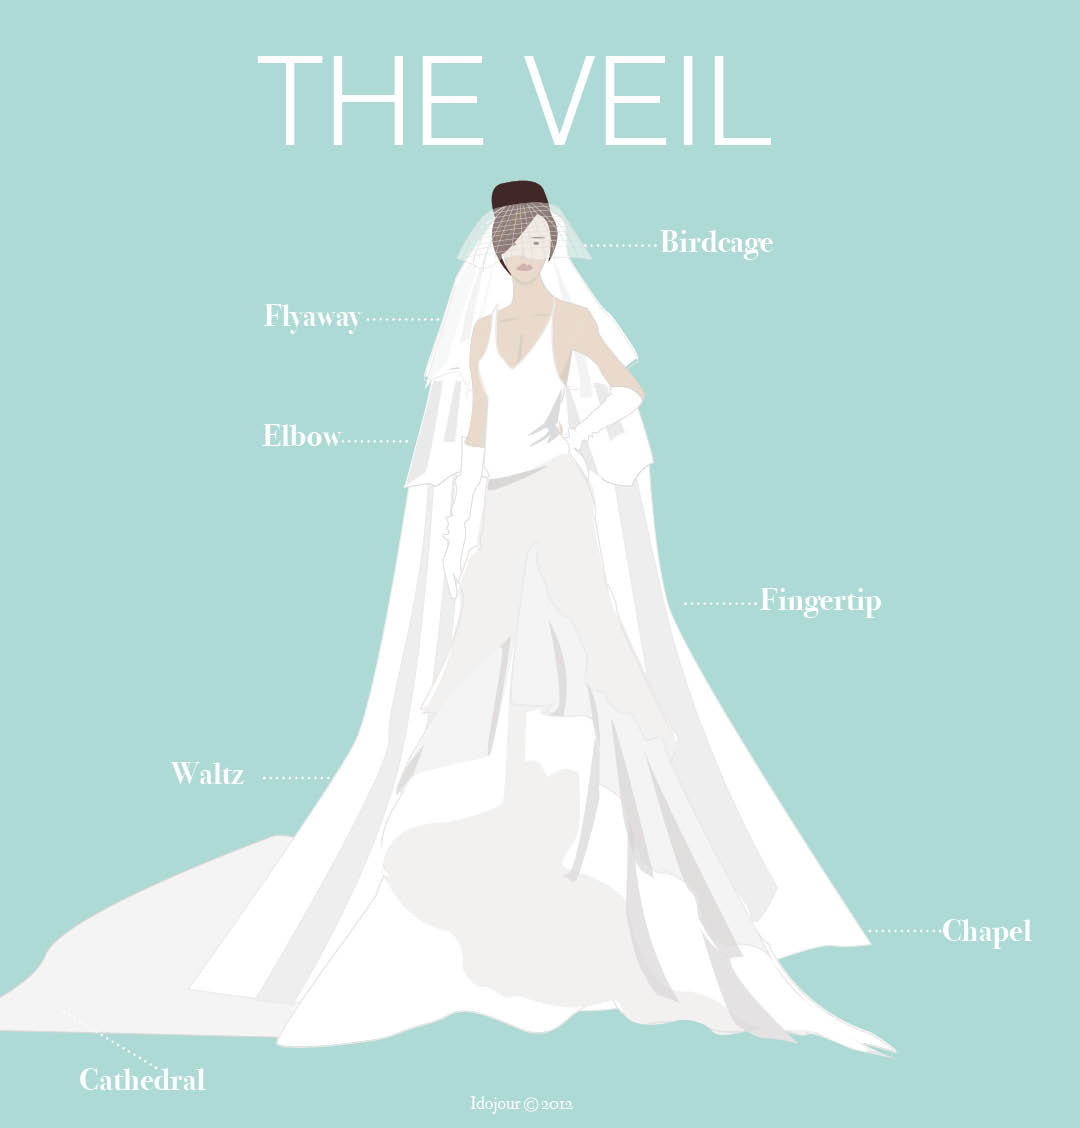 https://www.bridalguide.com/sites/default/files/blog-images/fashion-beauty/idojour-veils/bridal%20veil.jpg